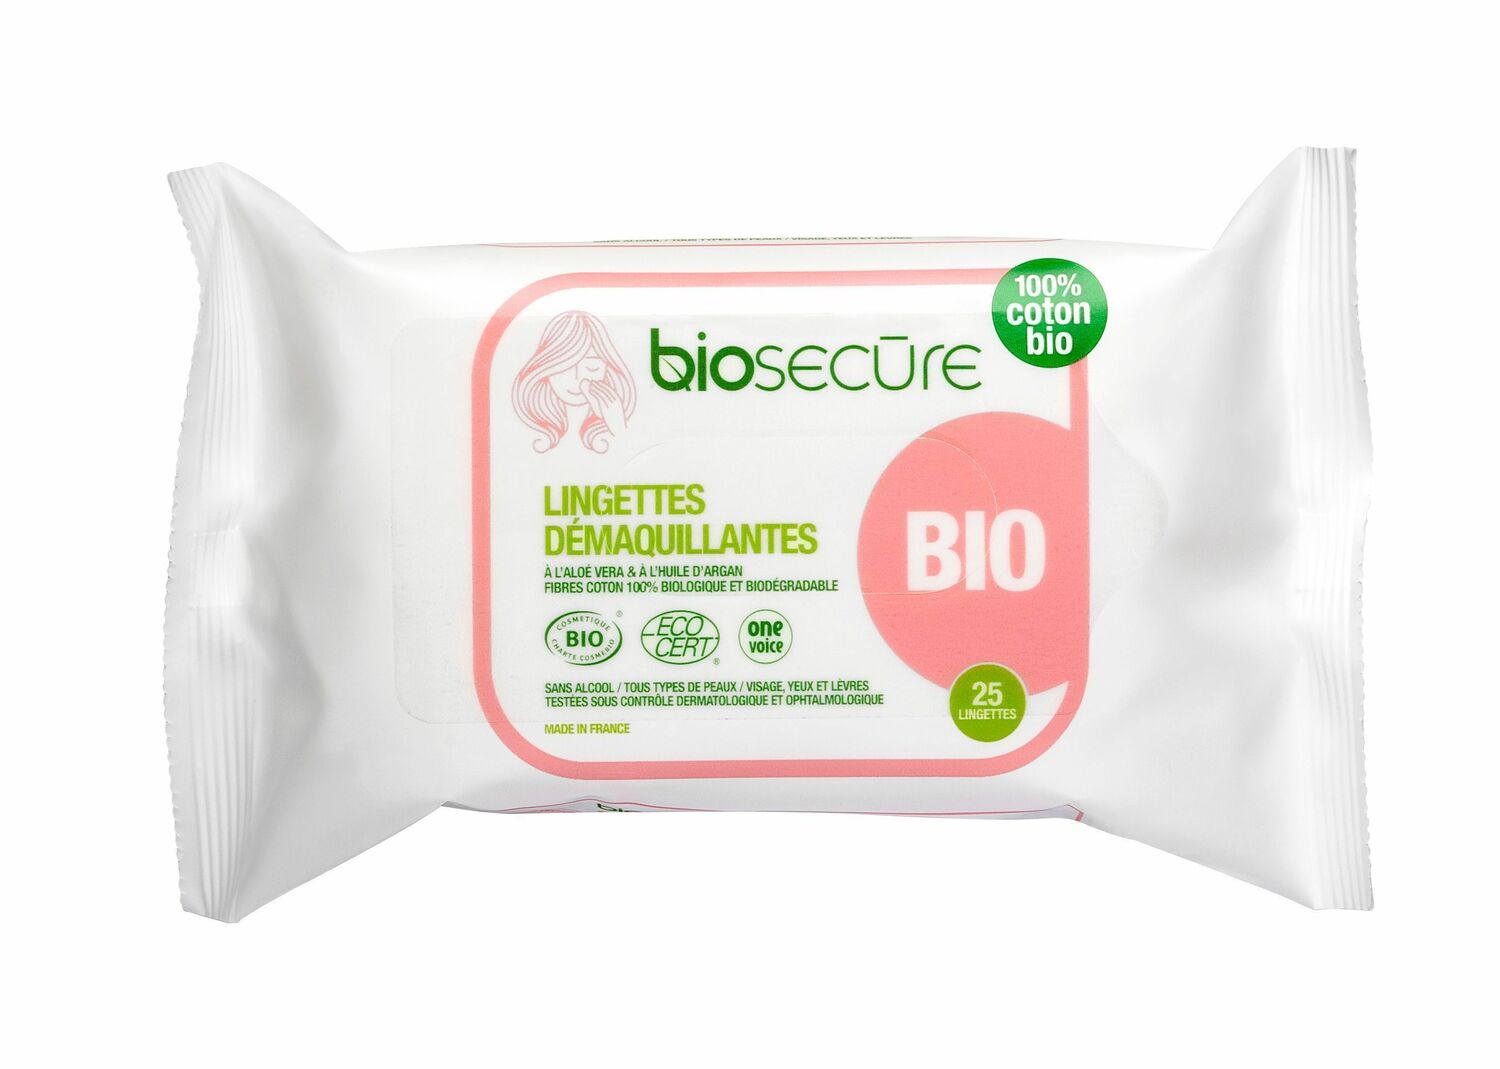 BioSecure lingettes démaquillantes Bio - Huile argan, aloe vera